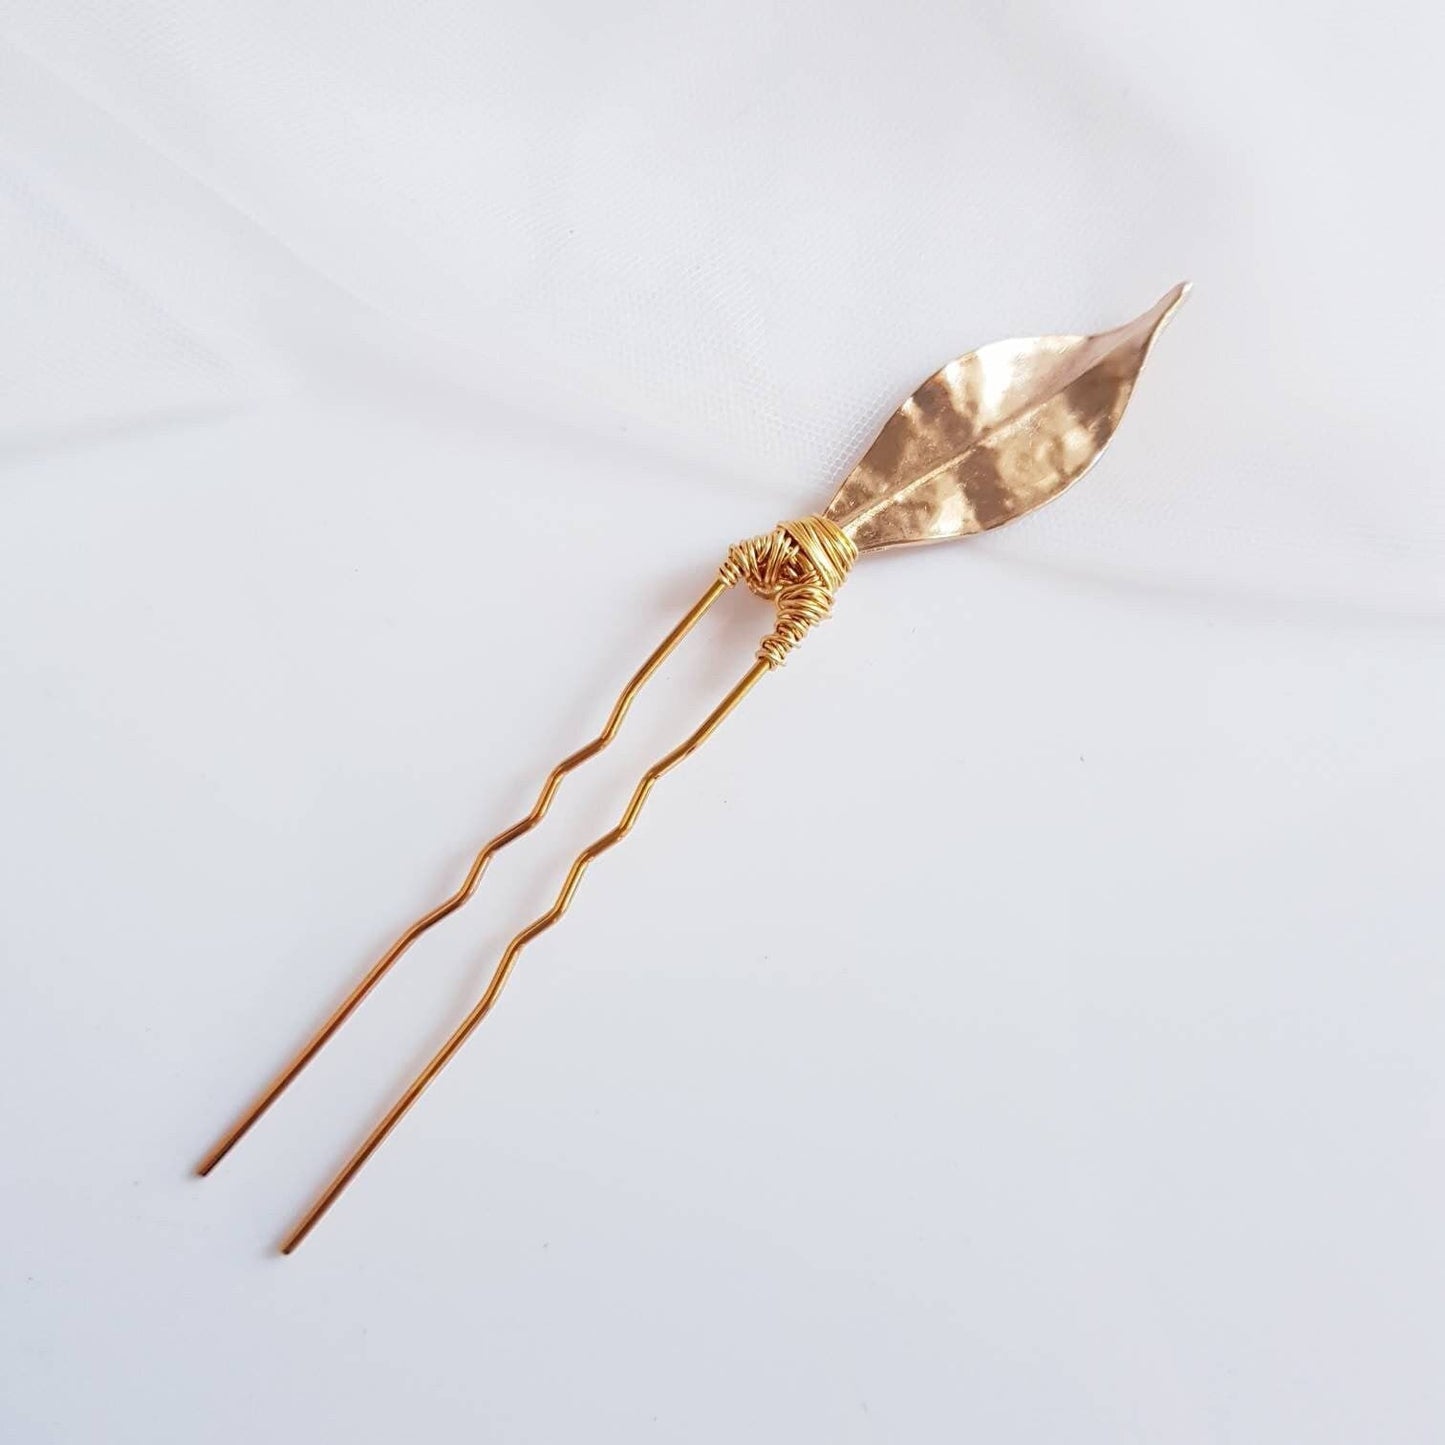 BoutiquebyBrendaLee FEUILLE D'OR Hair U pins Gold hairpin Flower Leaf hair accessories handcrafted Australia wedding bridal botanical